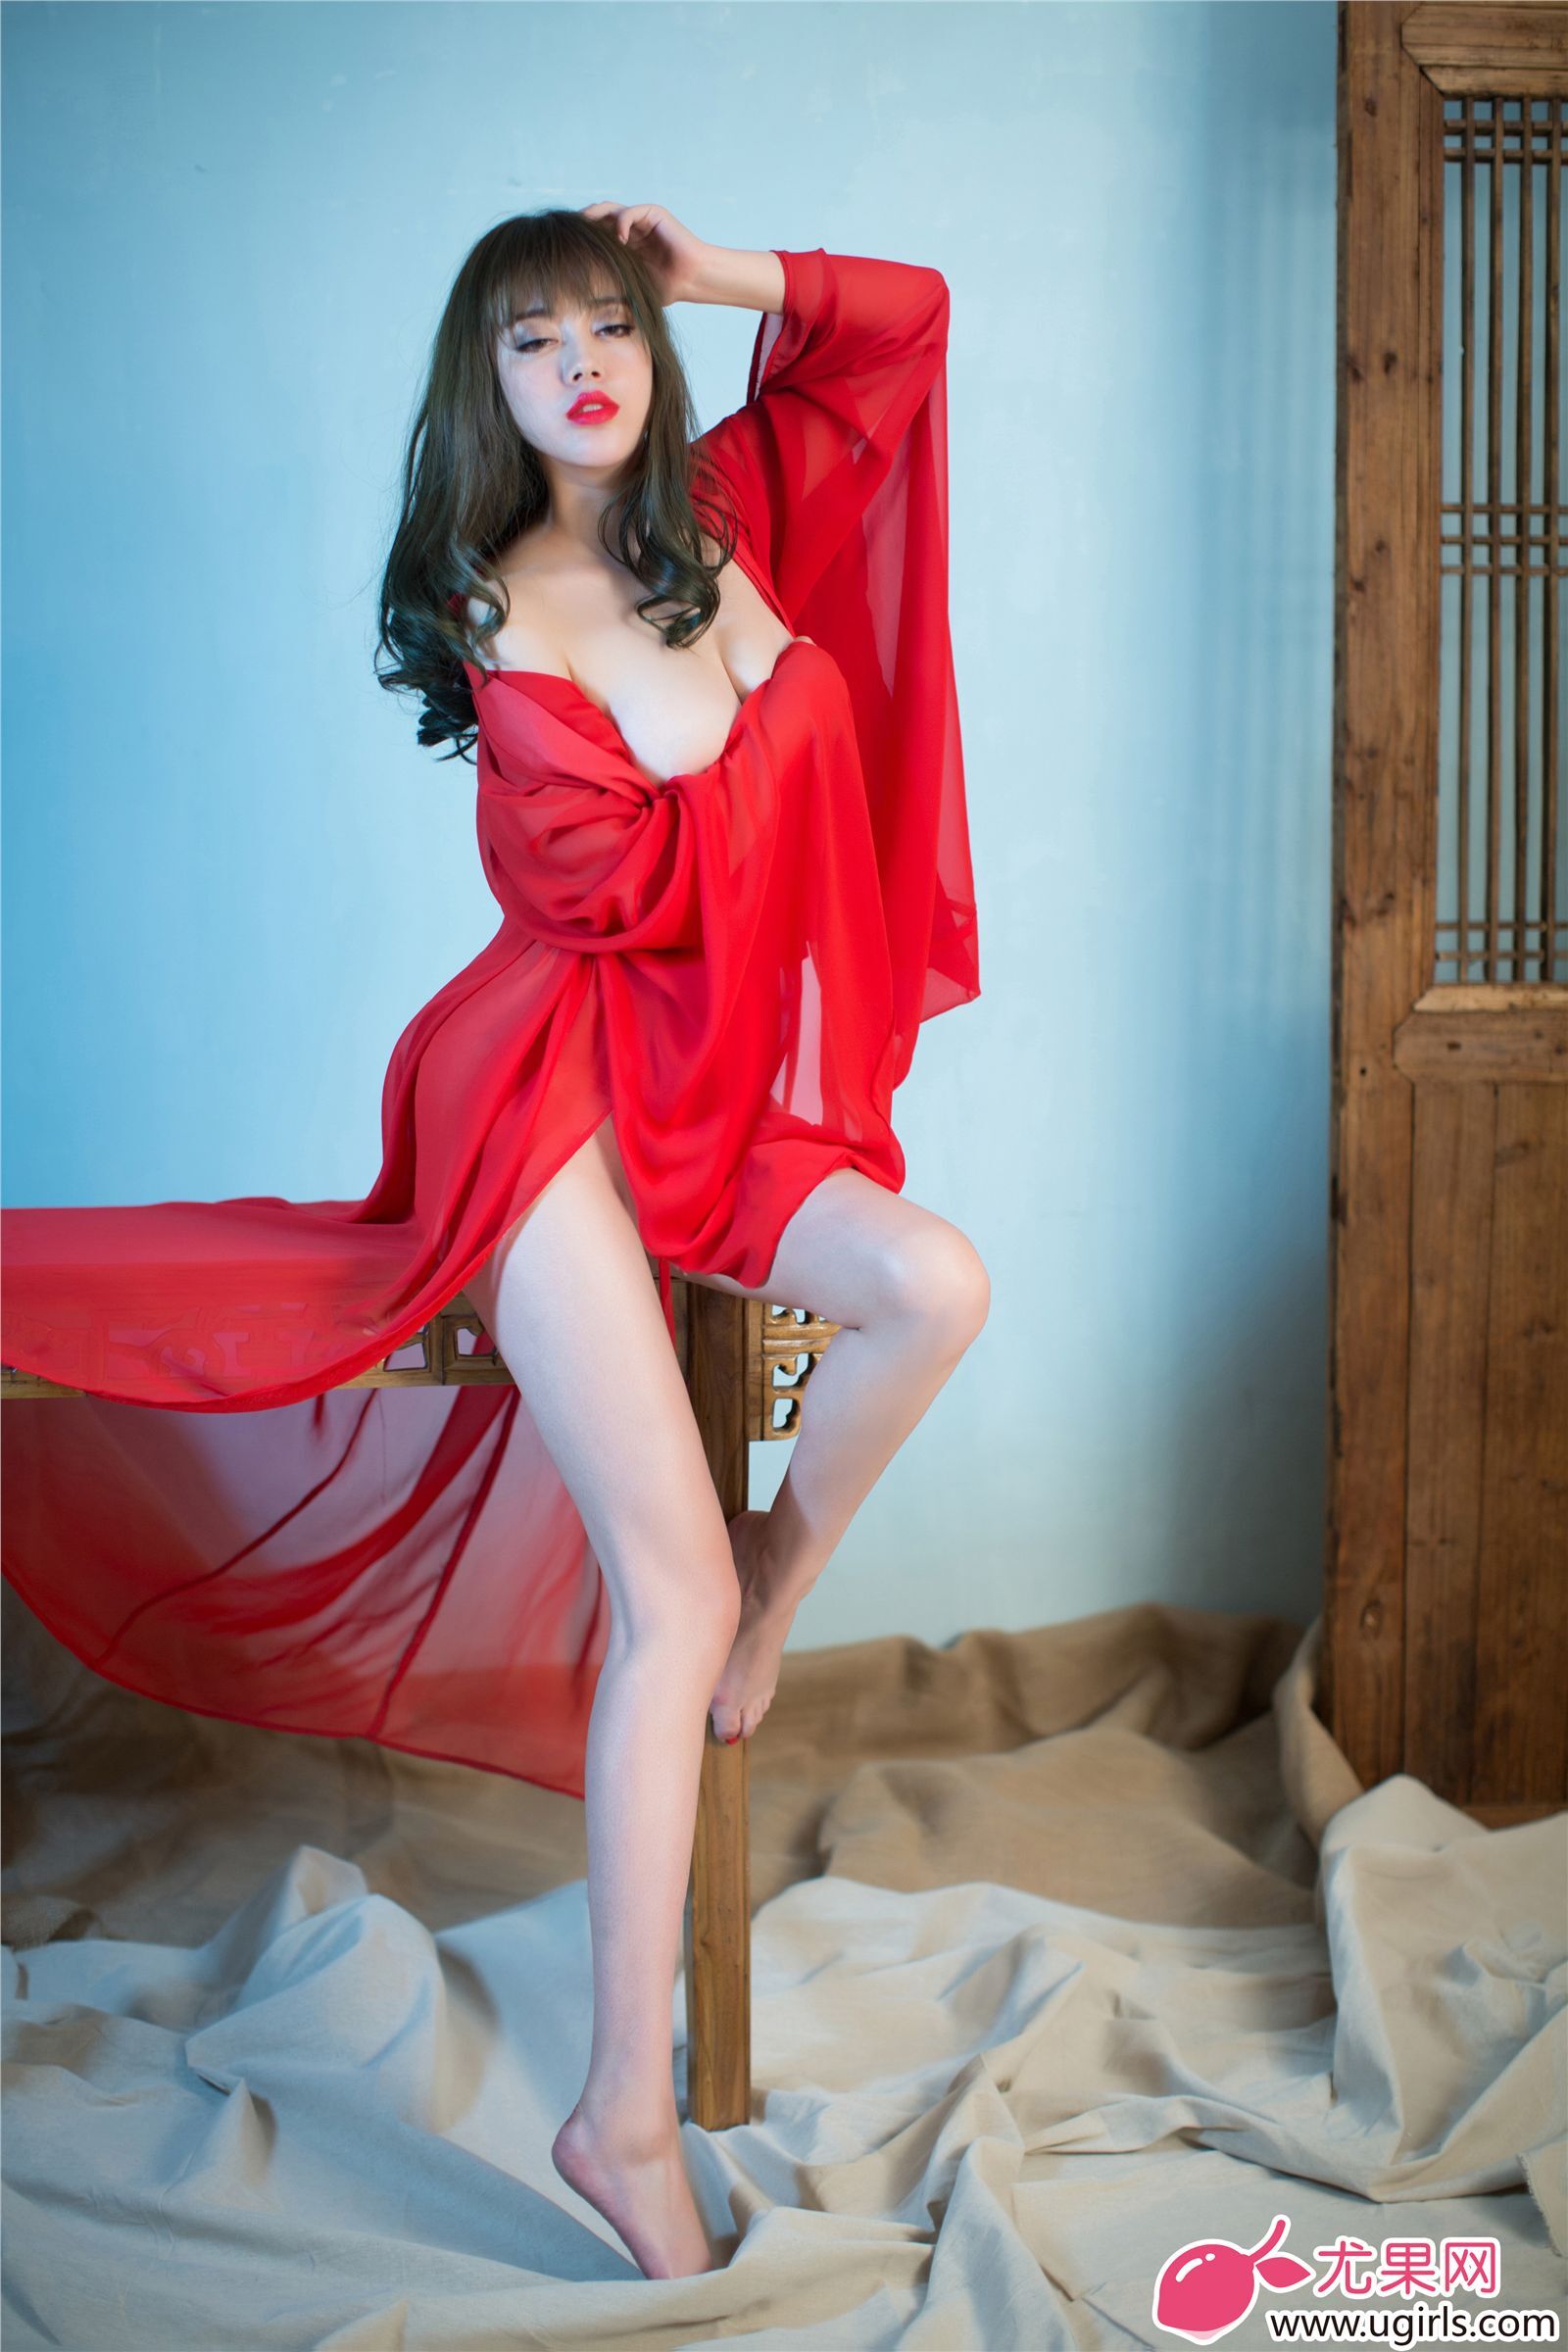 [ugirls.com] 2014.06.07 E018 leg model Wang Yiling